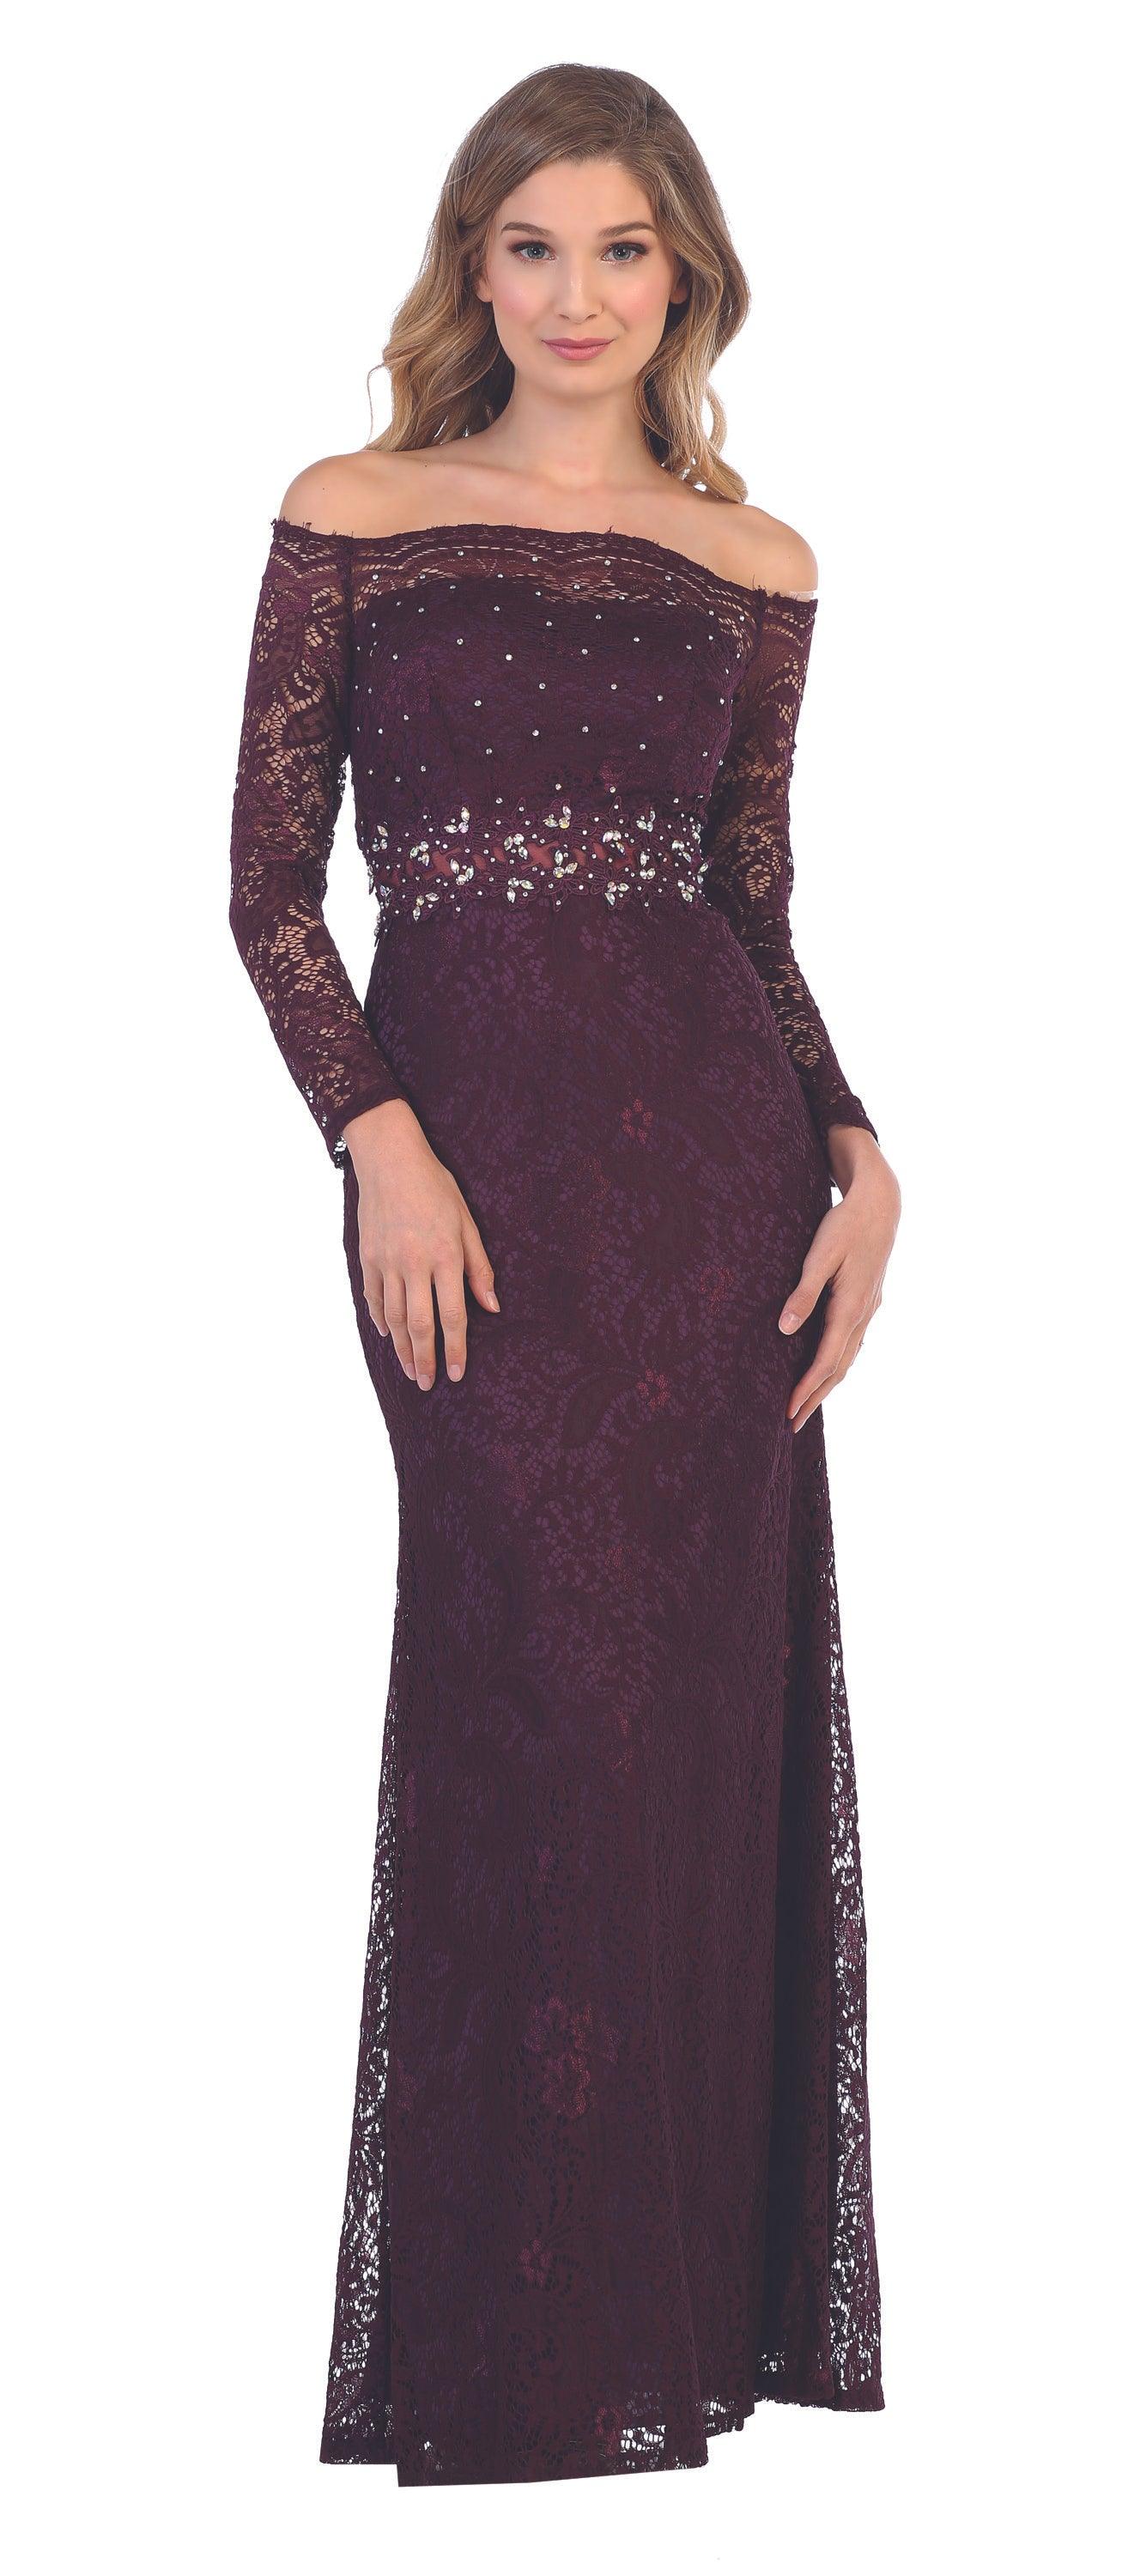 Long Off Shoulder Formal Lace Evening Party Dress - The Dress Outlet